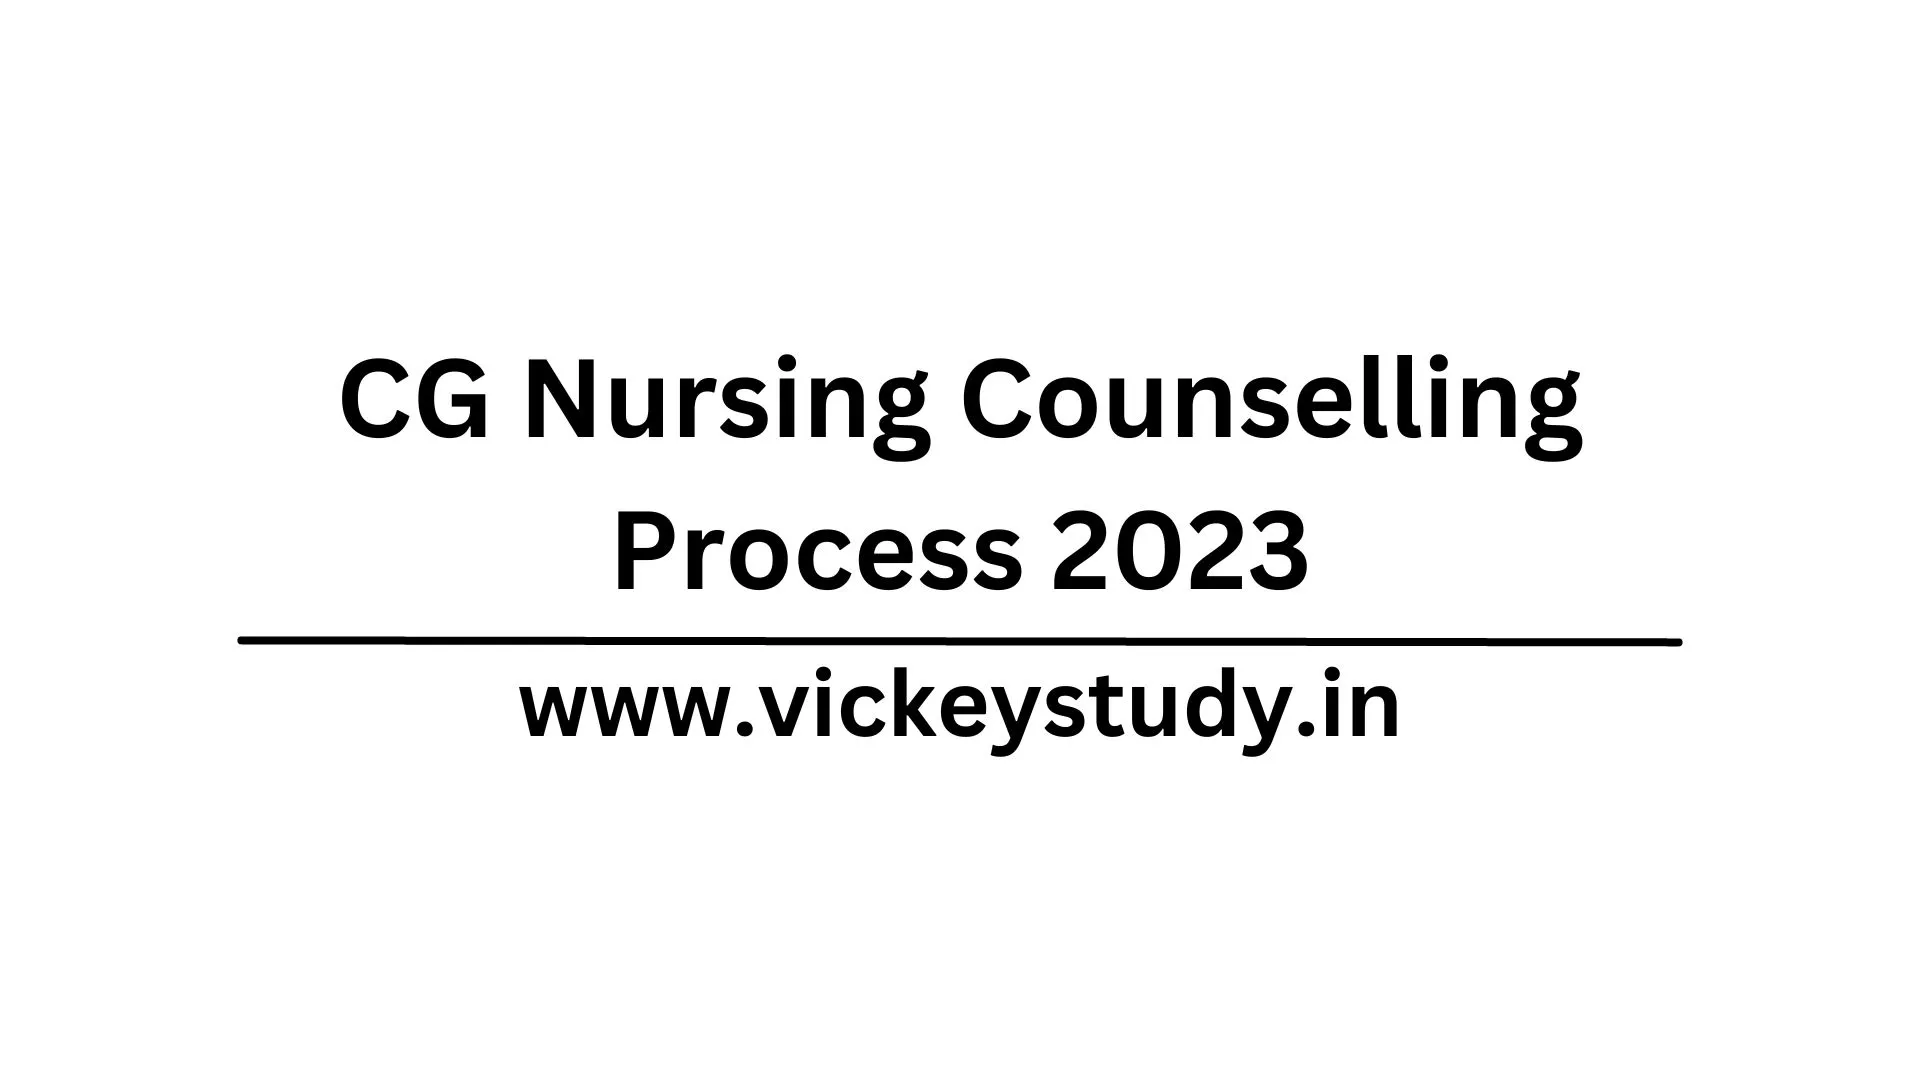 CG Nursing Counselling Process 2023